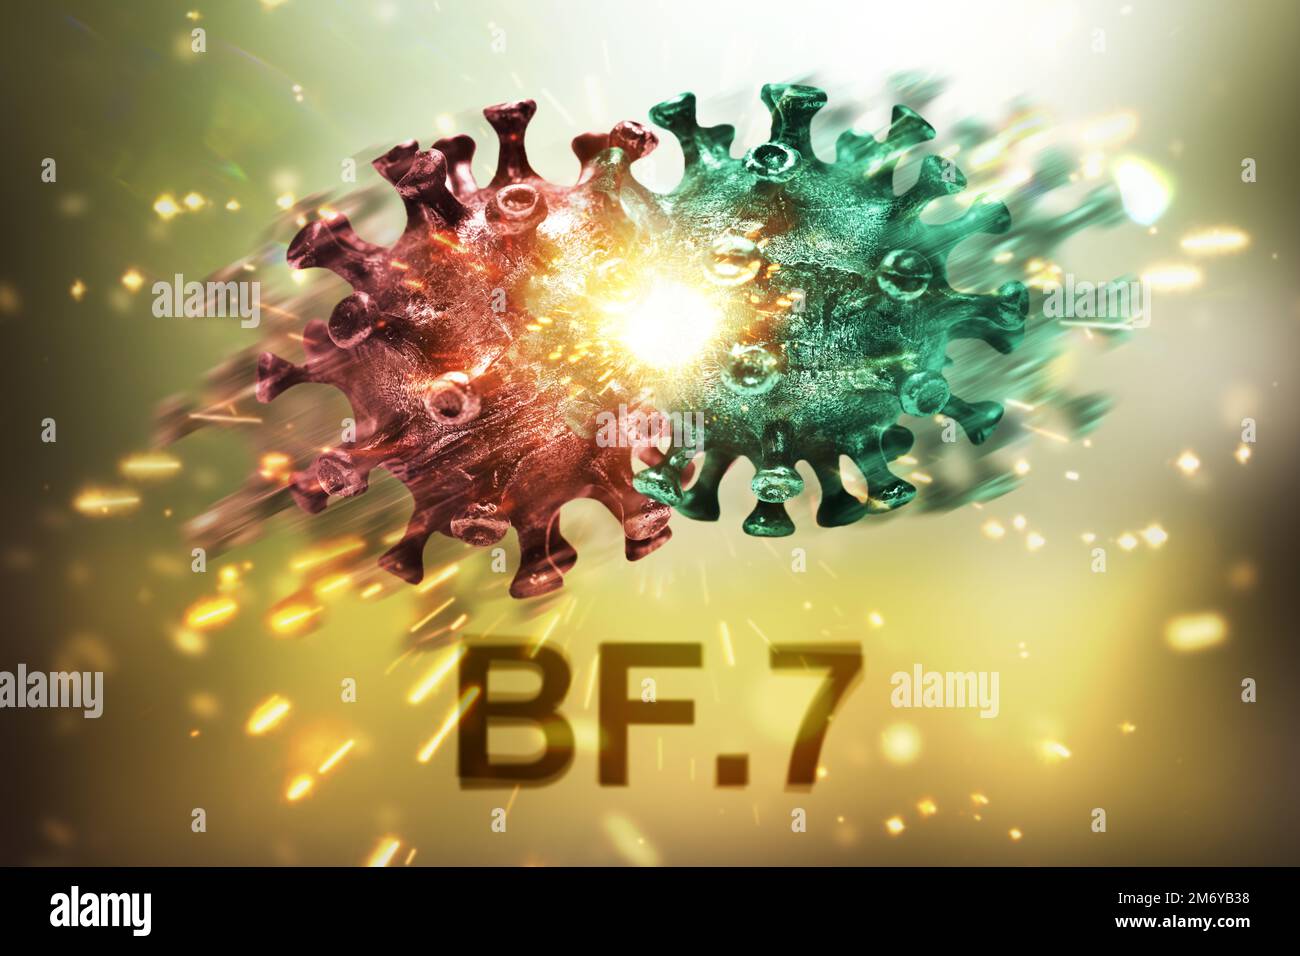 Corona Variante BF.7, symbolisches Bild Stockfoto